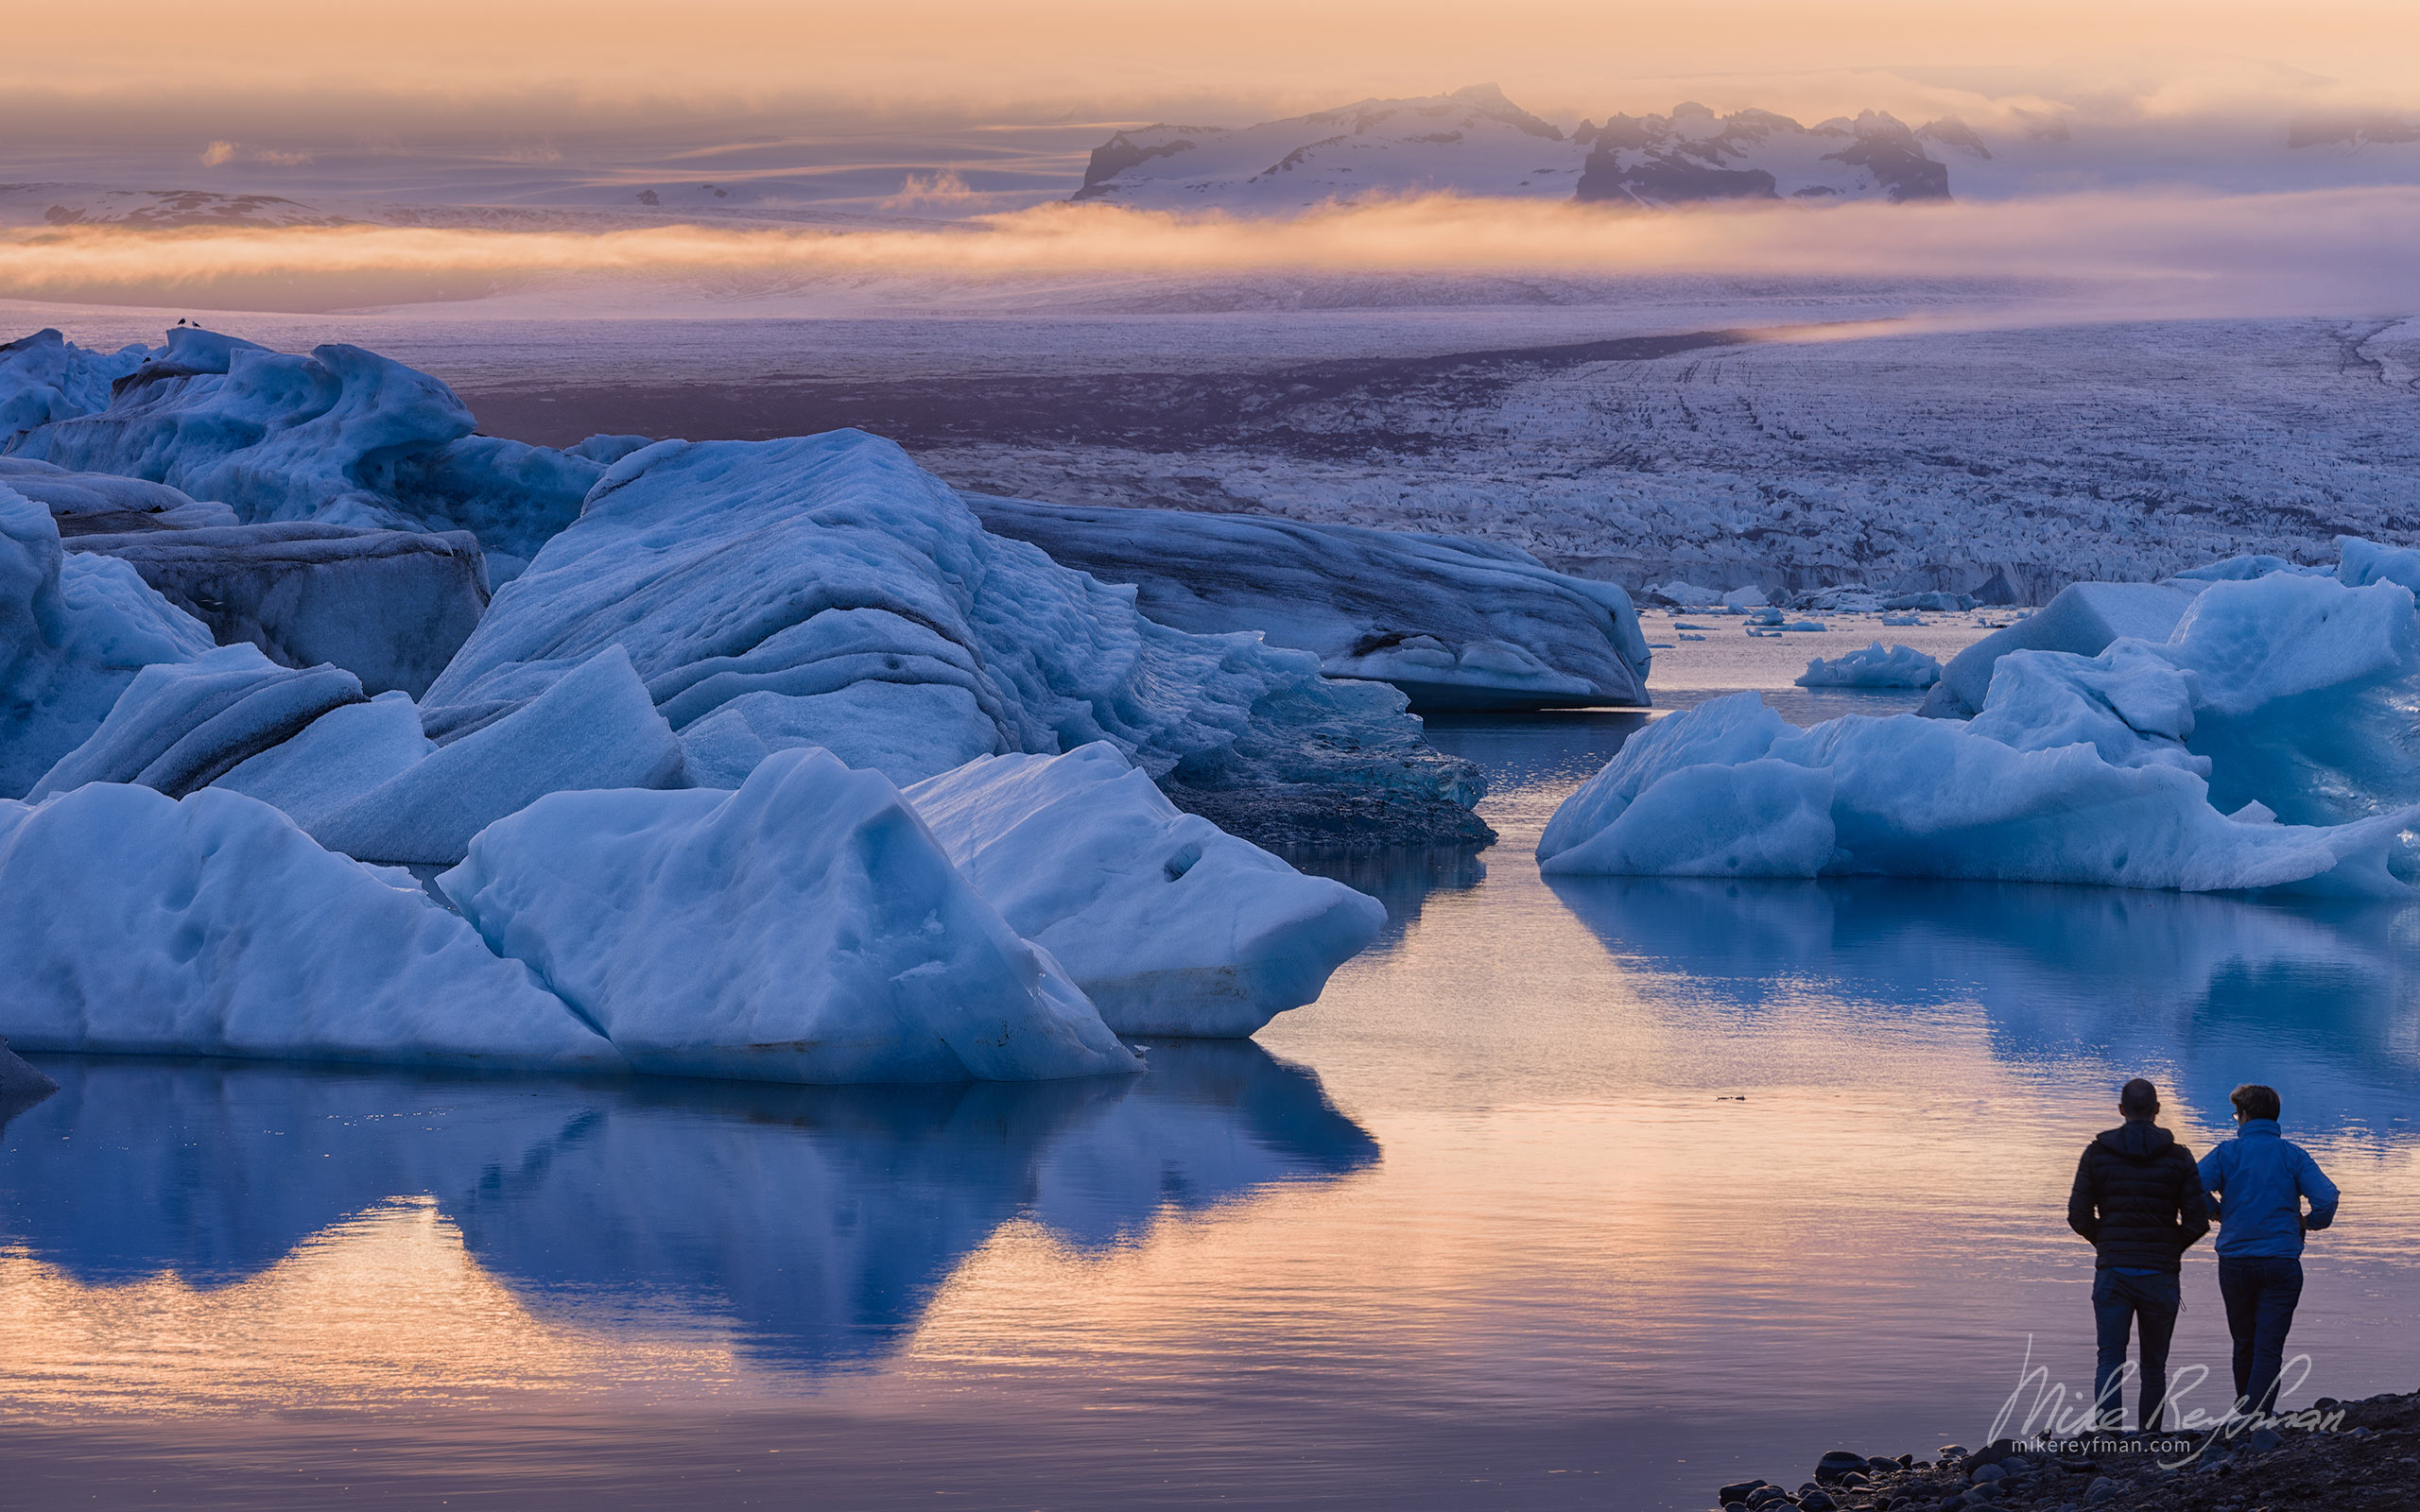 Icebergs in the Jokulsarlon (Jökulsárlón) glacial lagoon. Breiðamerkurjökull glacier, Vatnajökull National Park, Iceland, South coast IC-ICE 035 _D8B2855 - Where Lava Meets the Ocean. Iceland coastline. - Mike Reyfman Photography